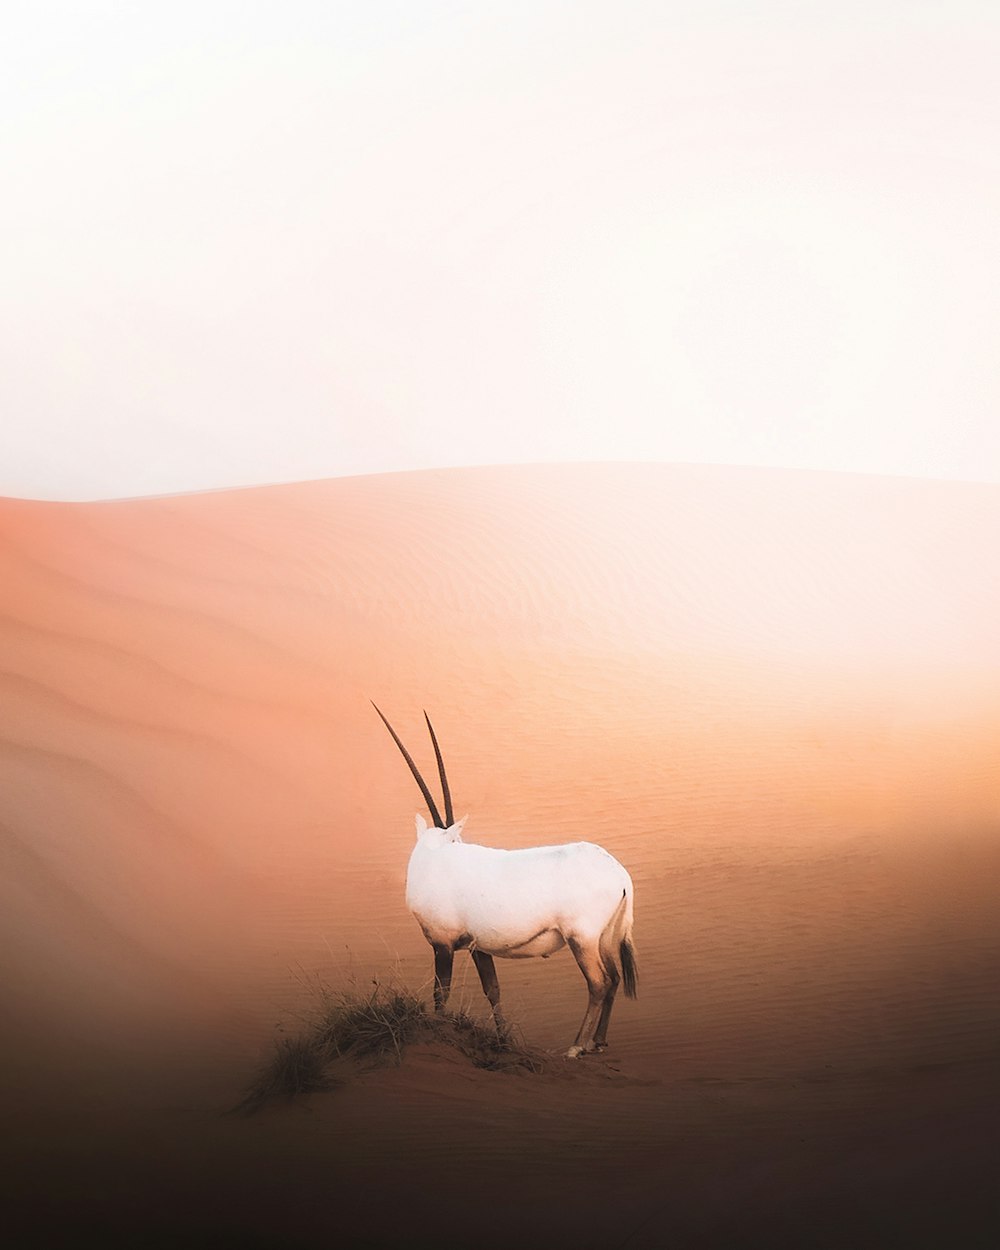 animal branco no deserto durante o dia